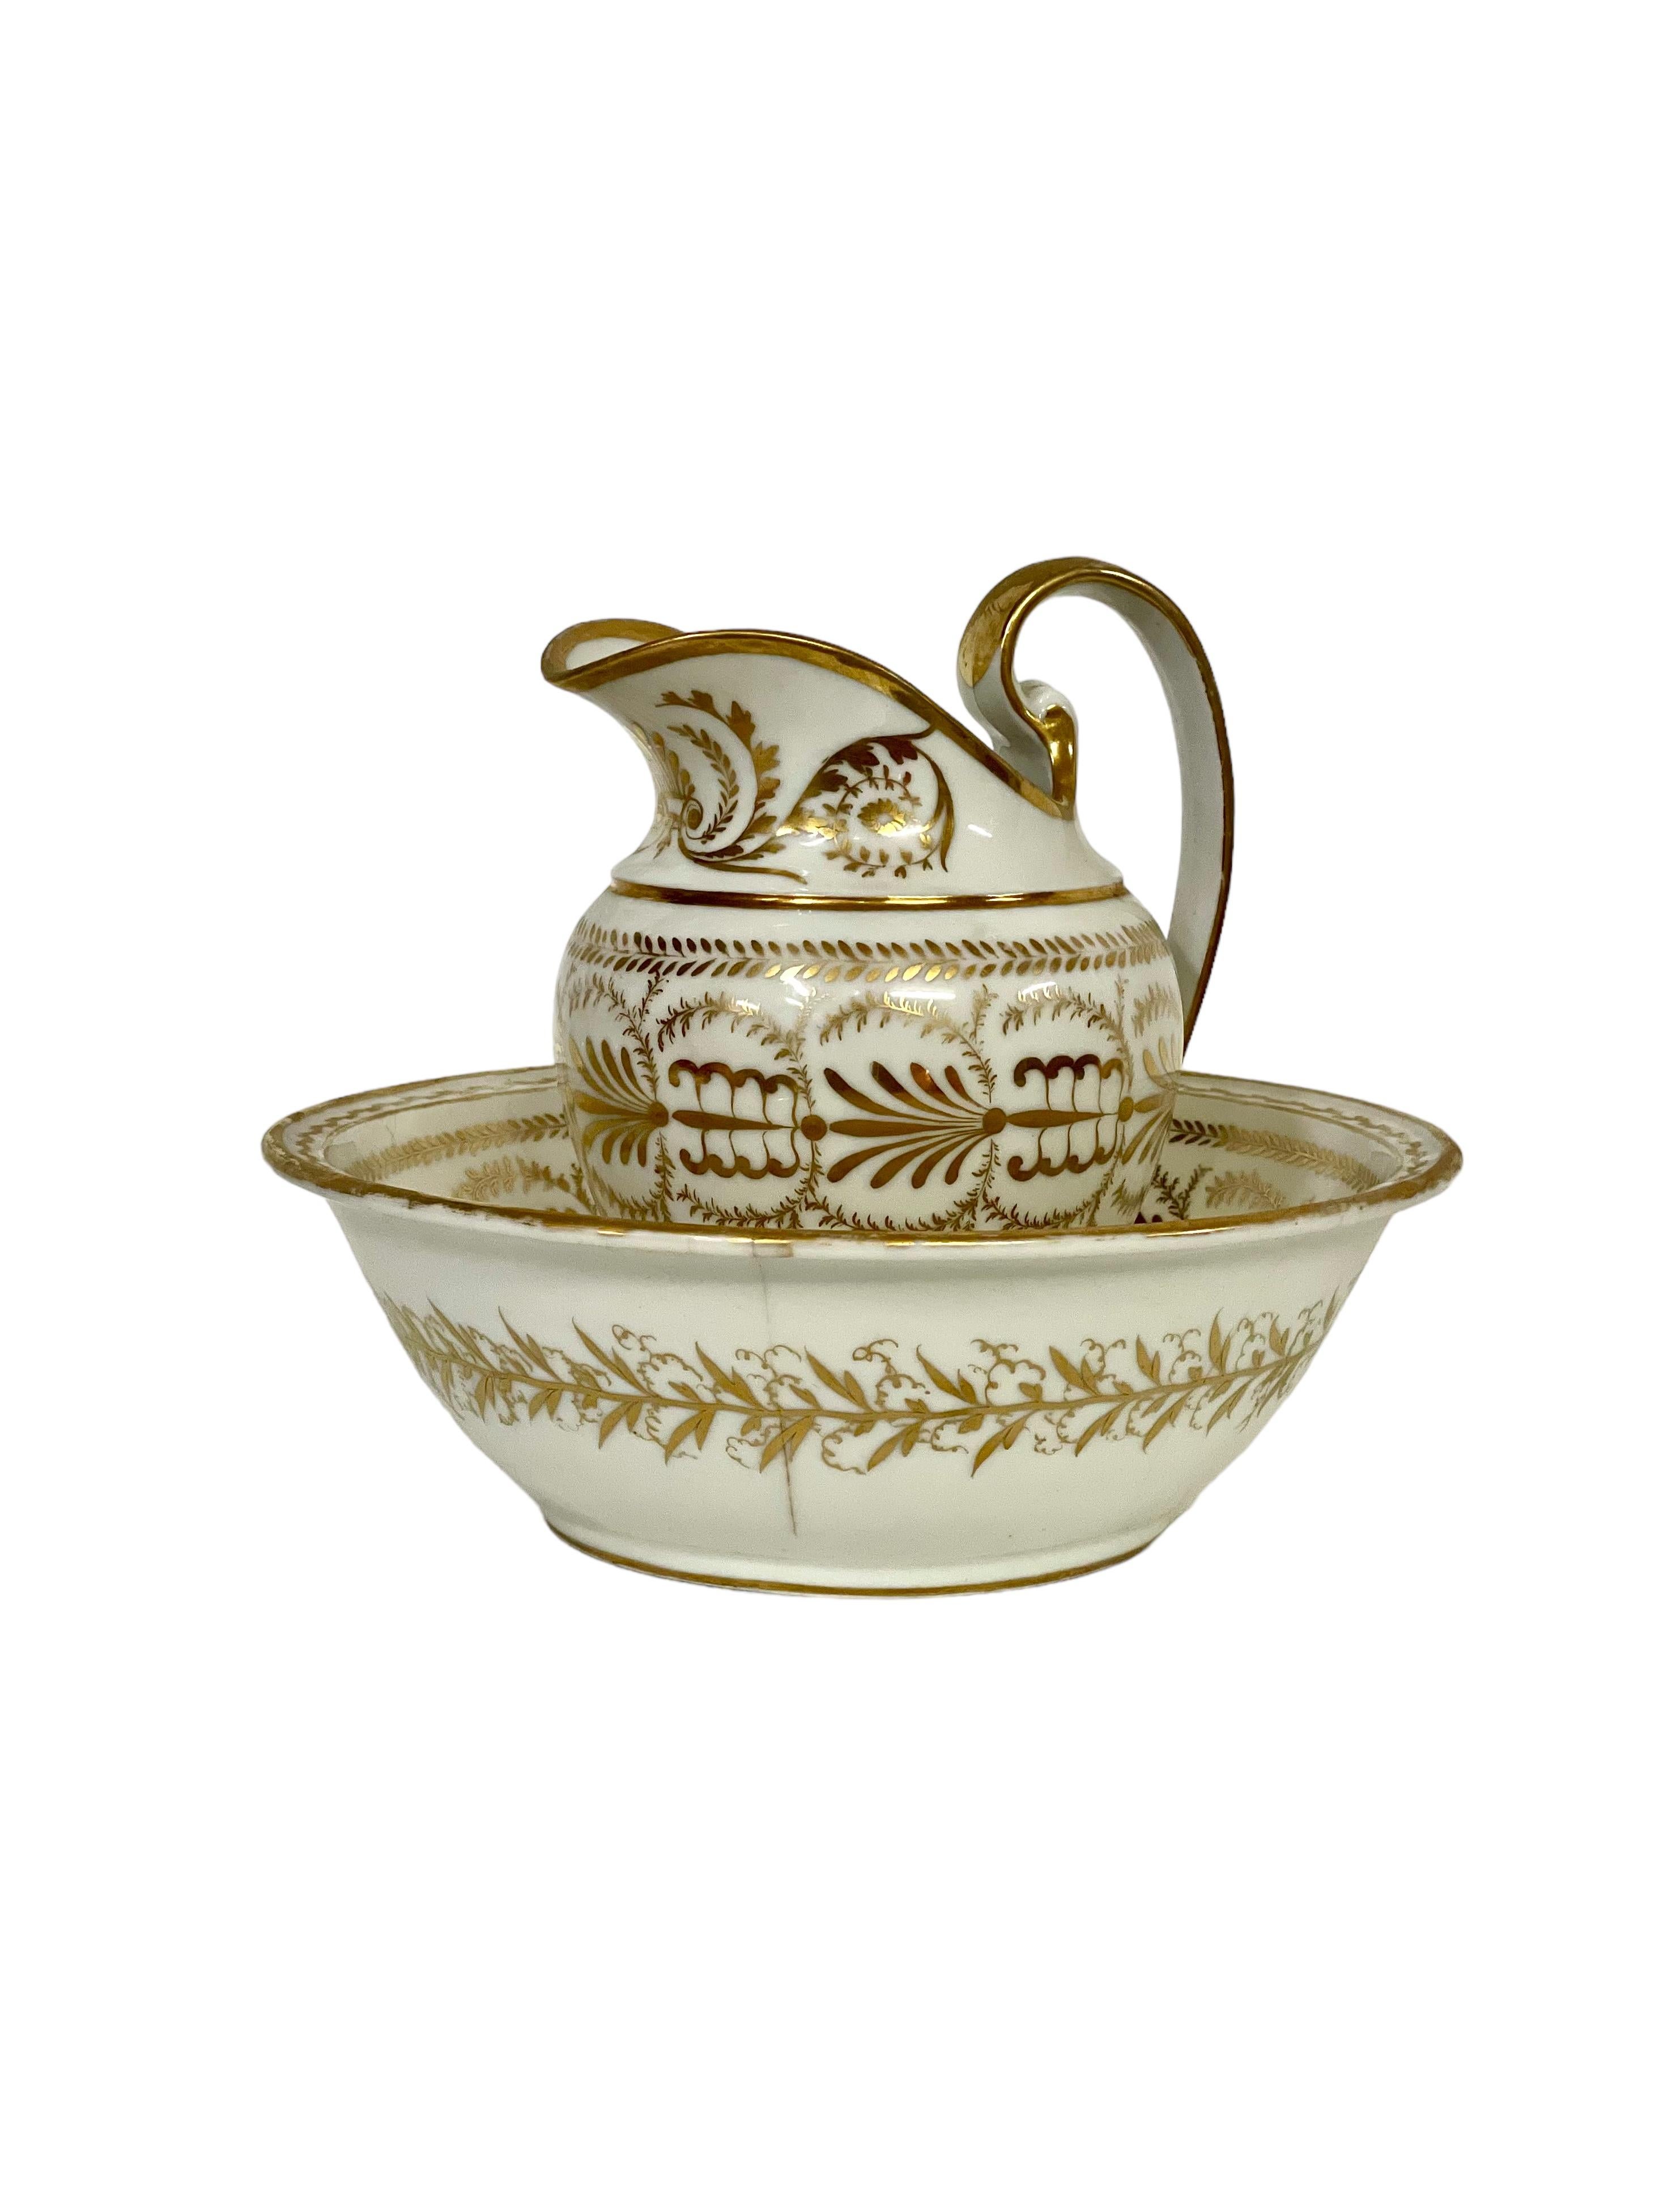 Empire Old Paris Porcelain Wash Jug and Basin with Gilt Decoration For Sale